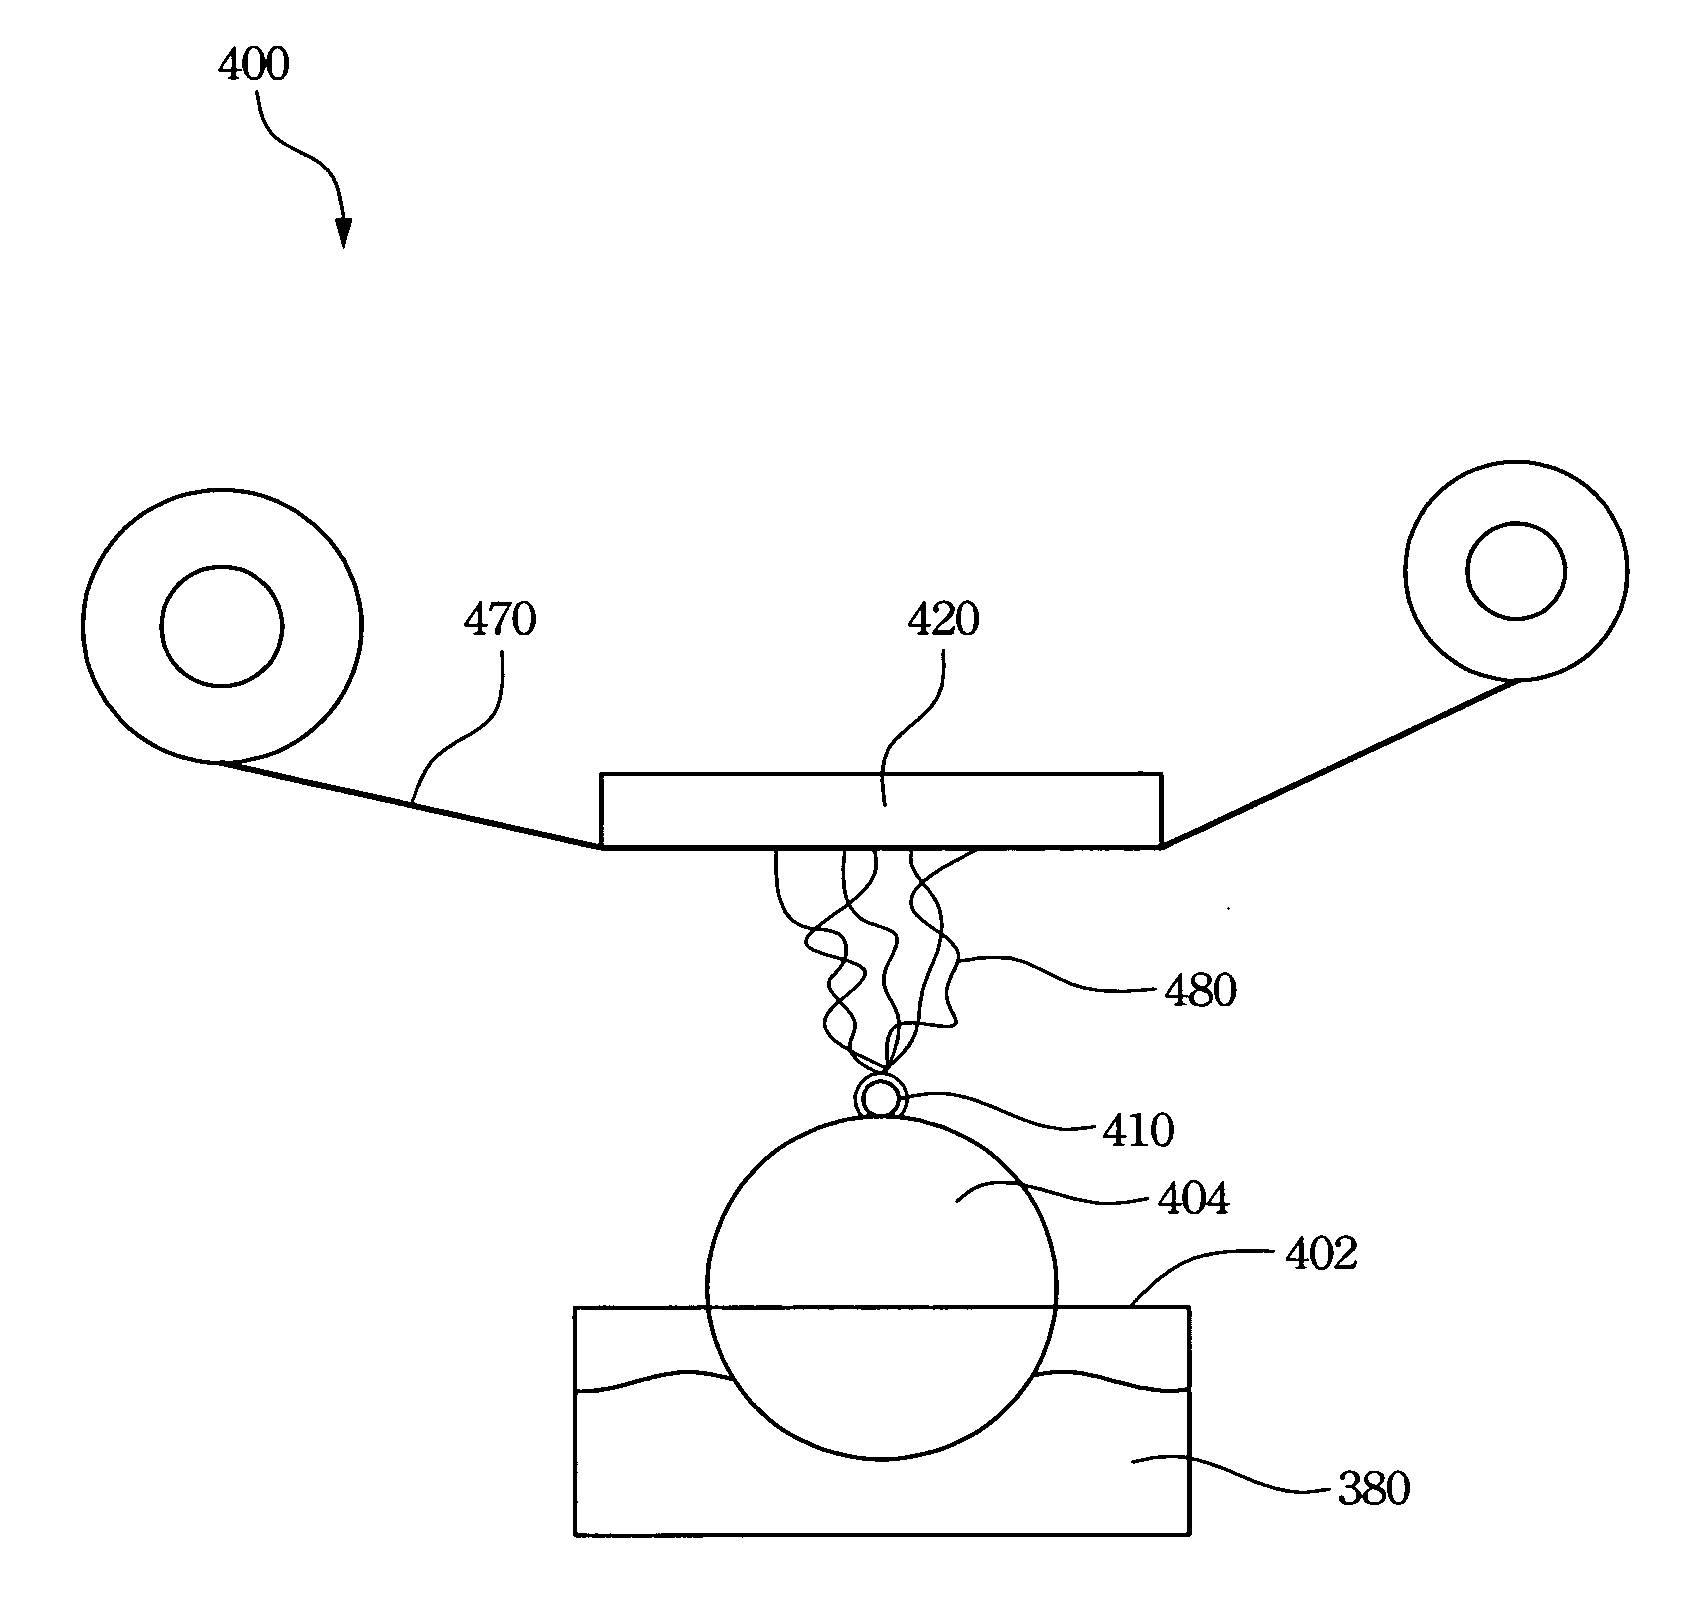 Electrostatic spinning apparatus